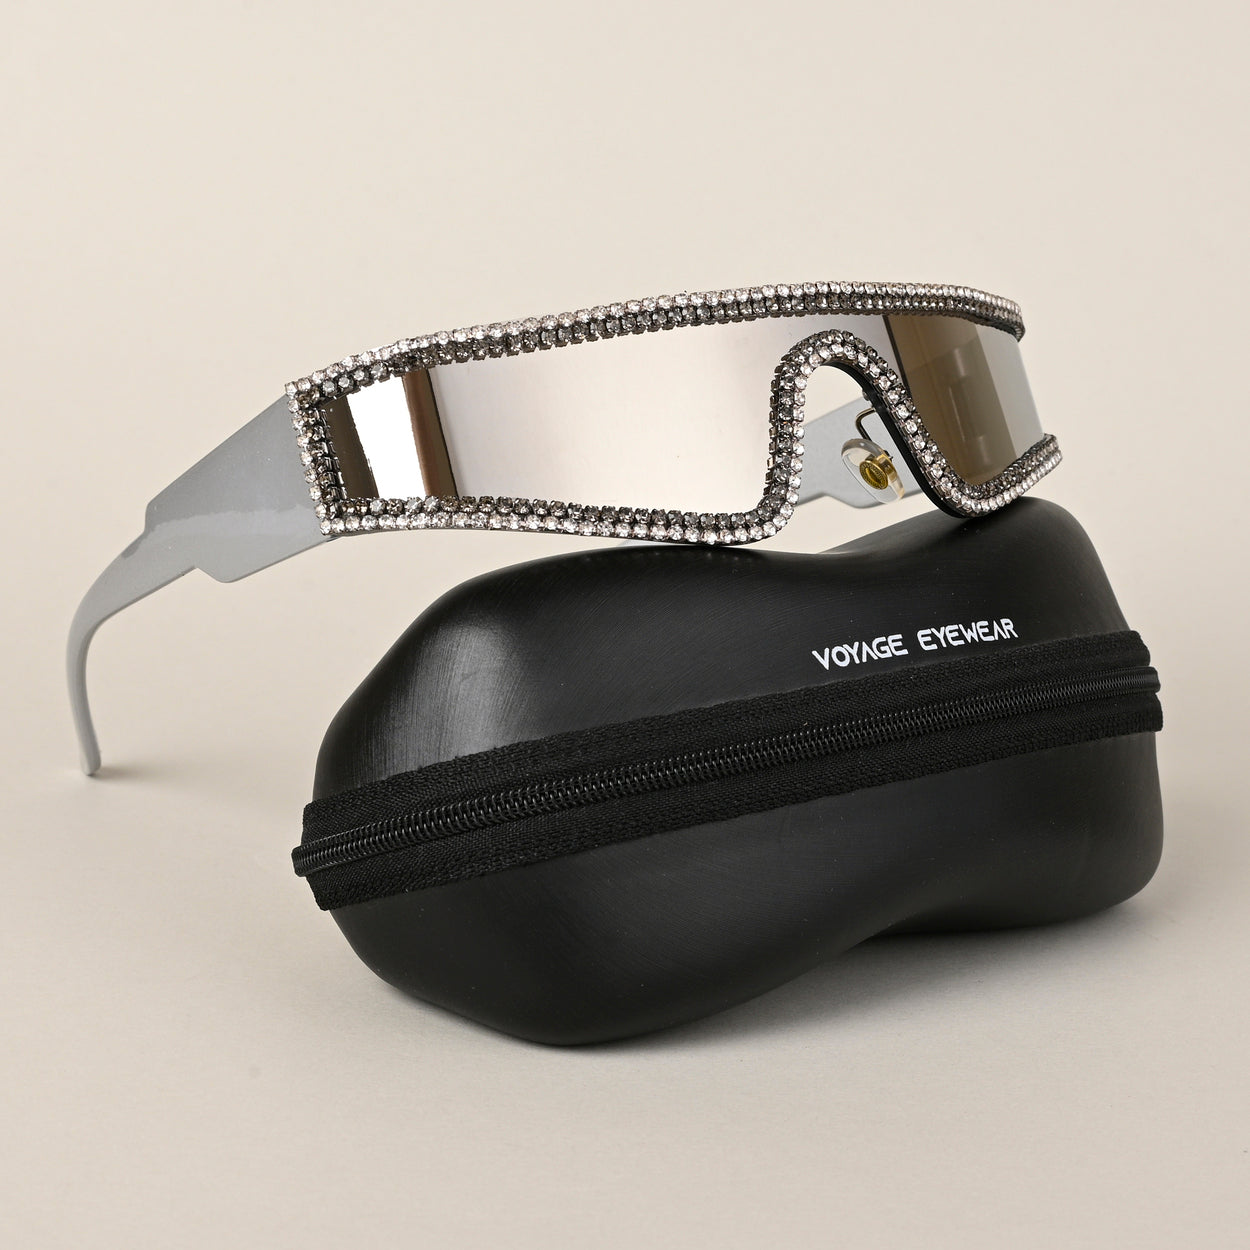 Voyage Silver Wrap-Around Sunglasses for Men & Women - MG4349